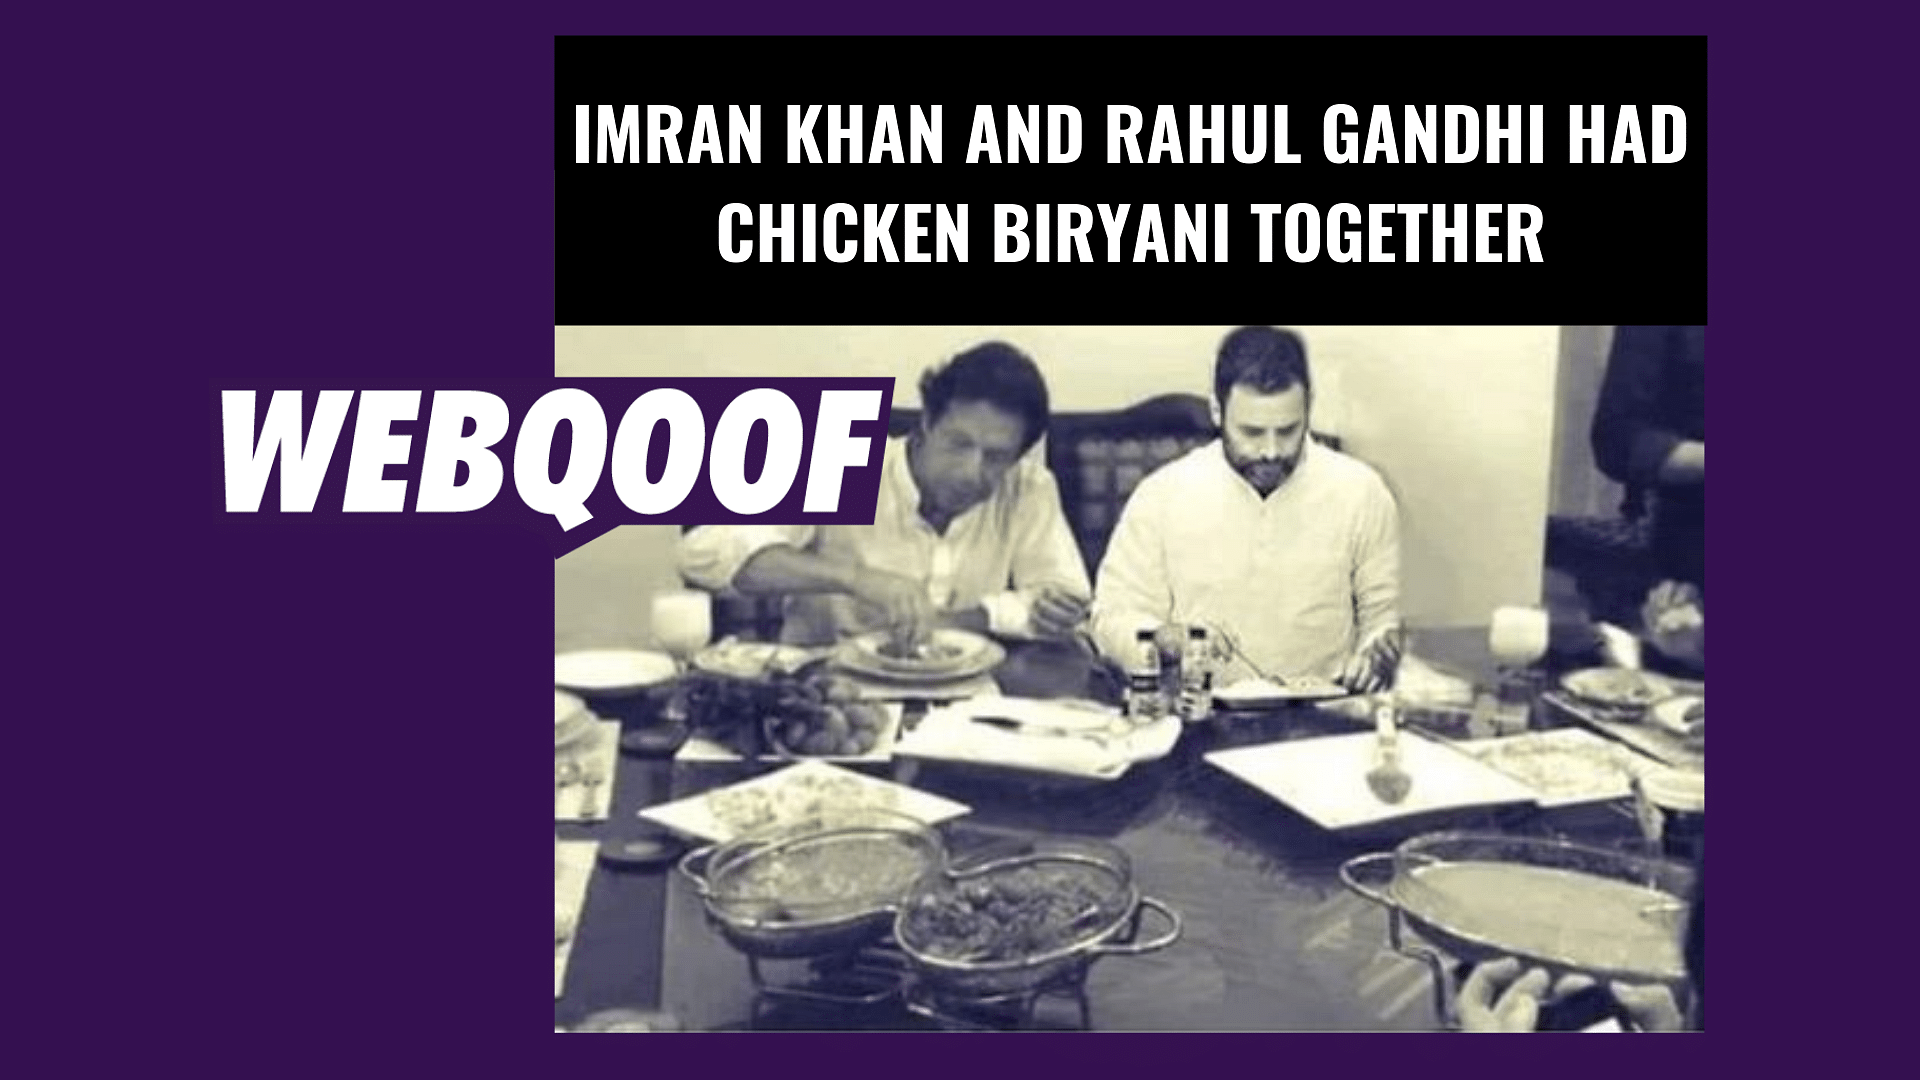 The original image has Imran Khan sitting beside his former wife Reham Khan.